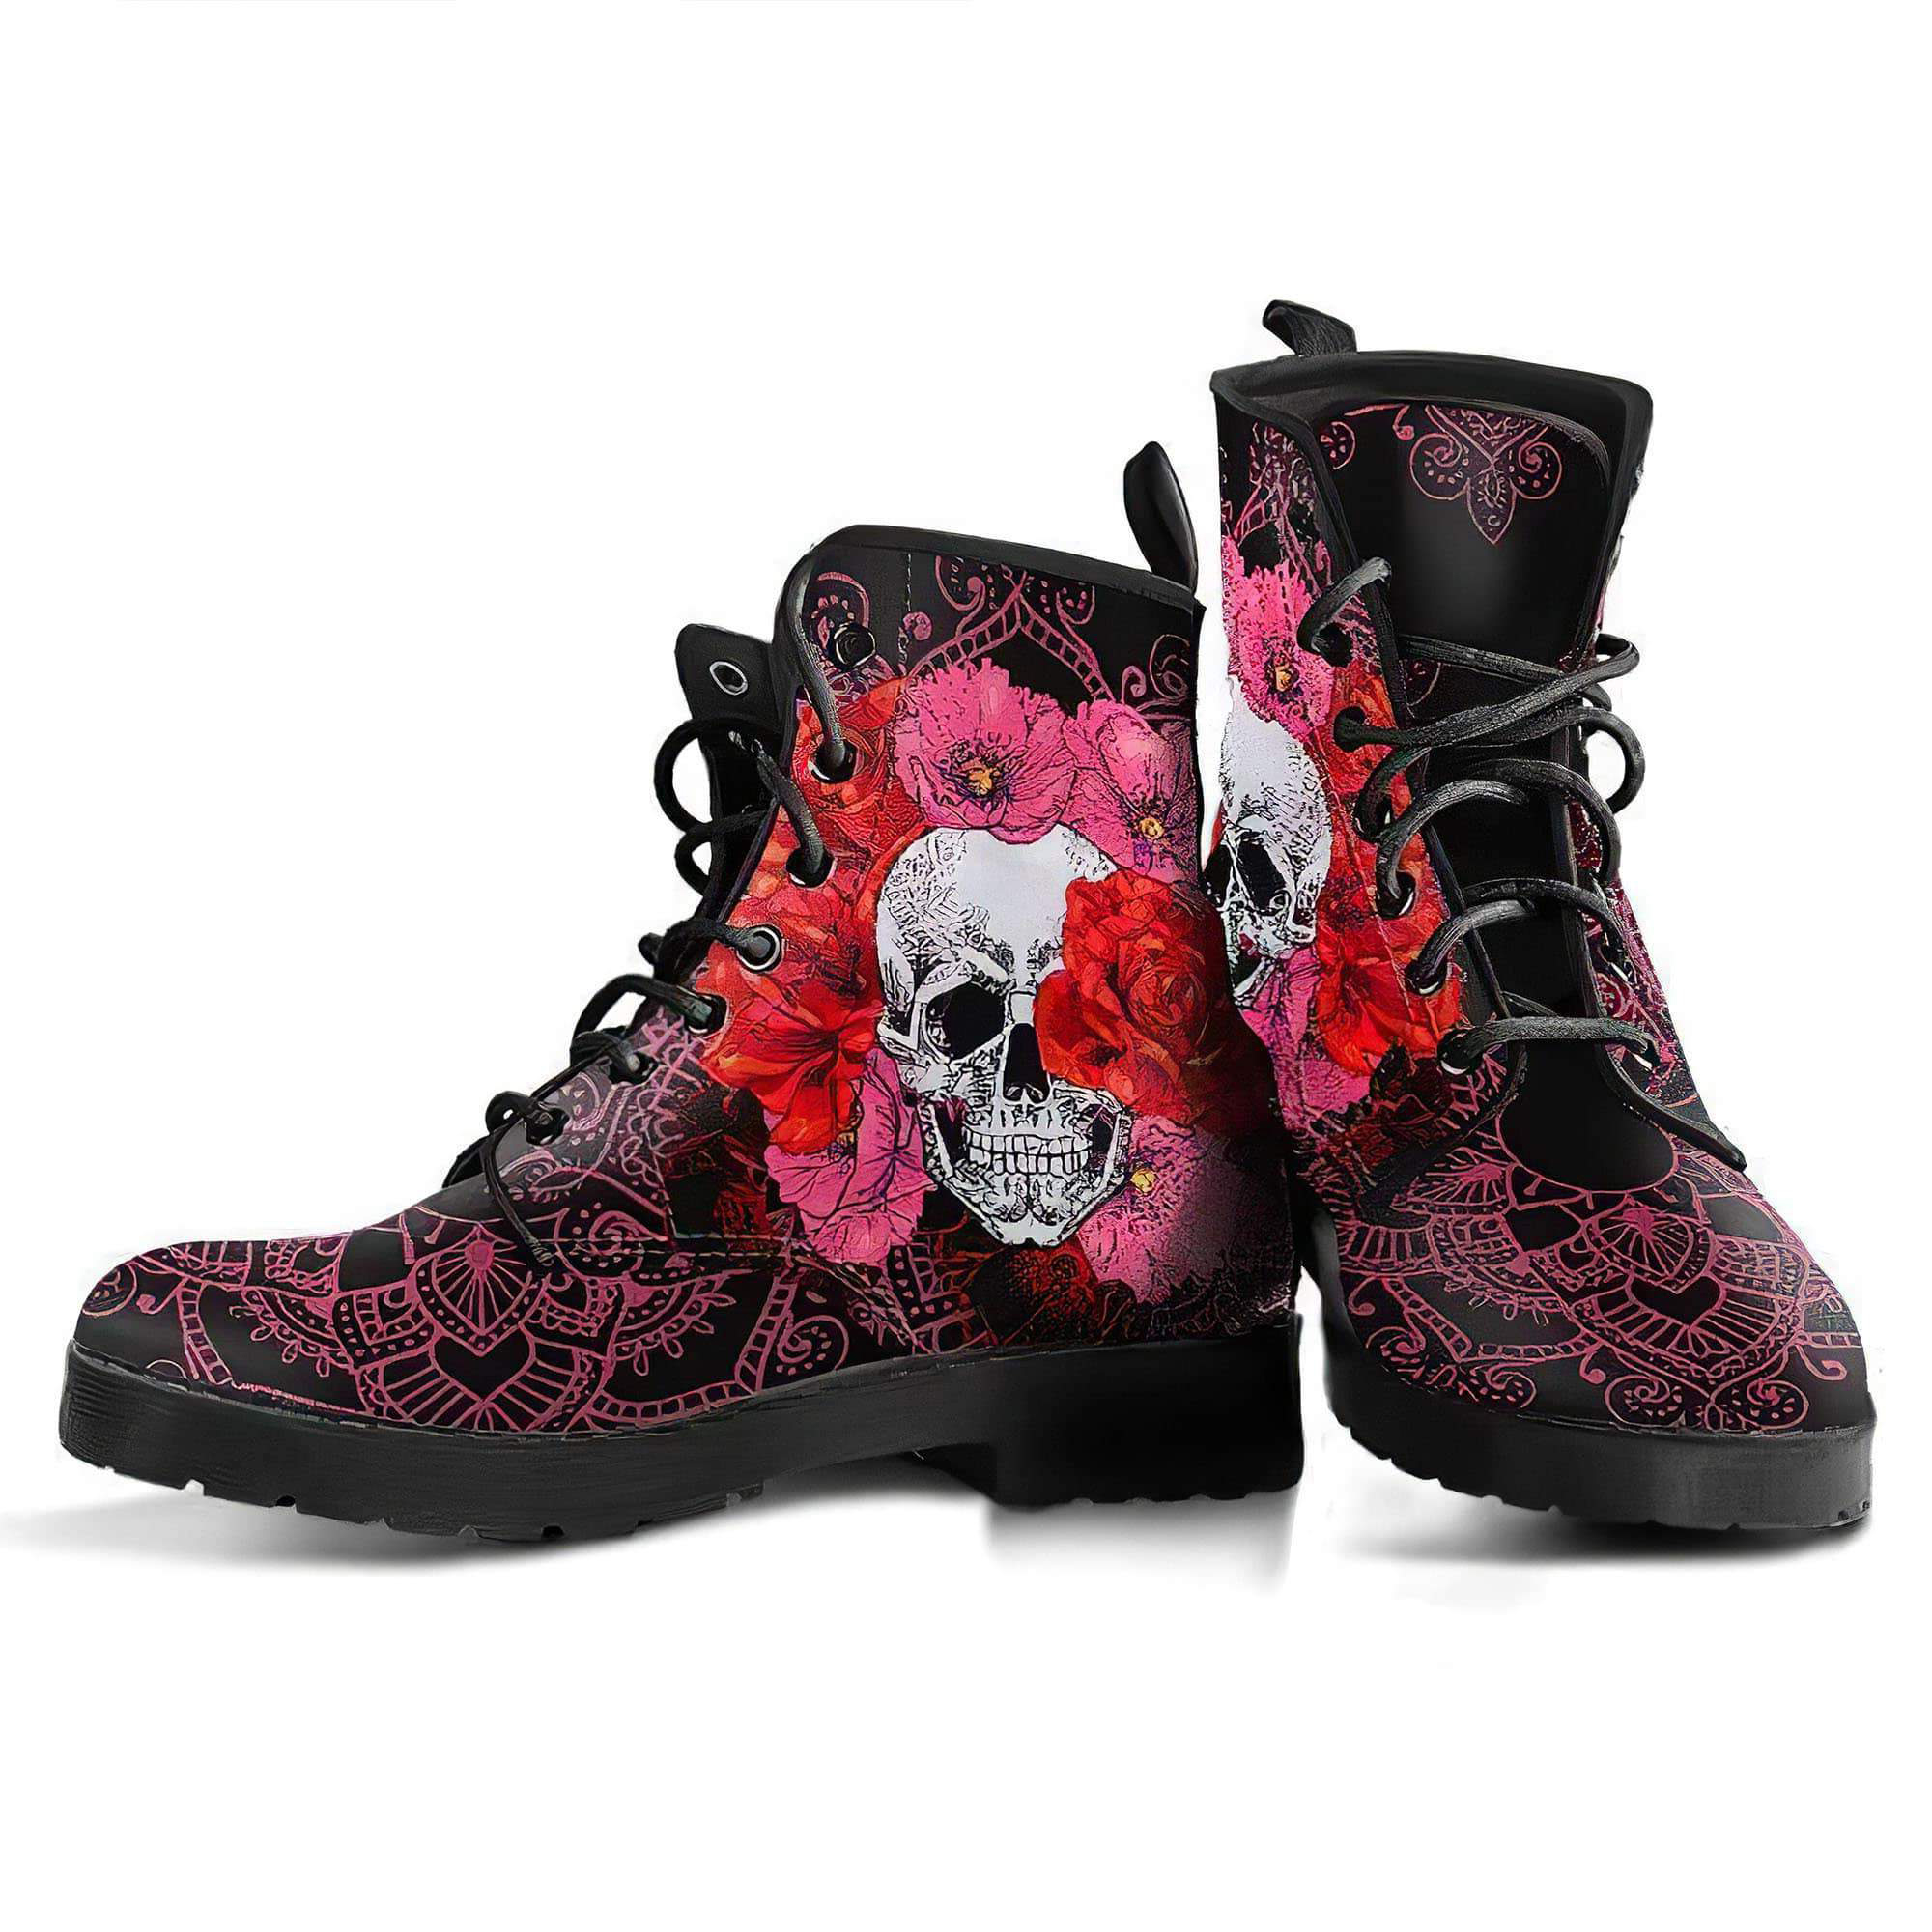 skull-roses-women-s-boots-vegan-friendly-leather-women-s-leather-boots-12051950207037.jpg